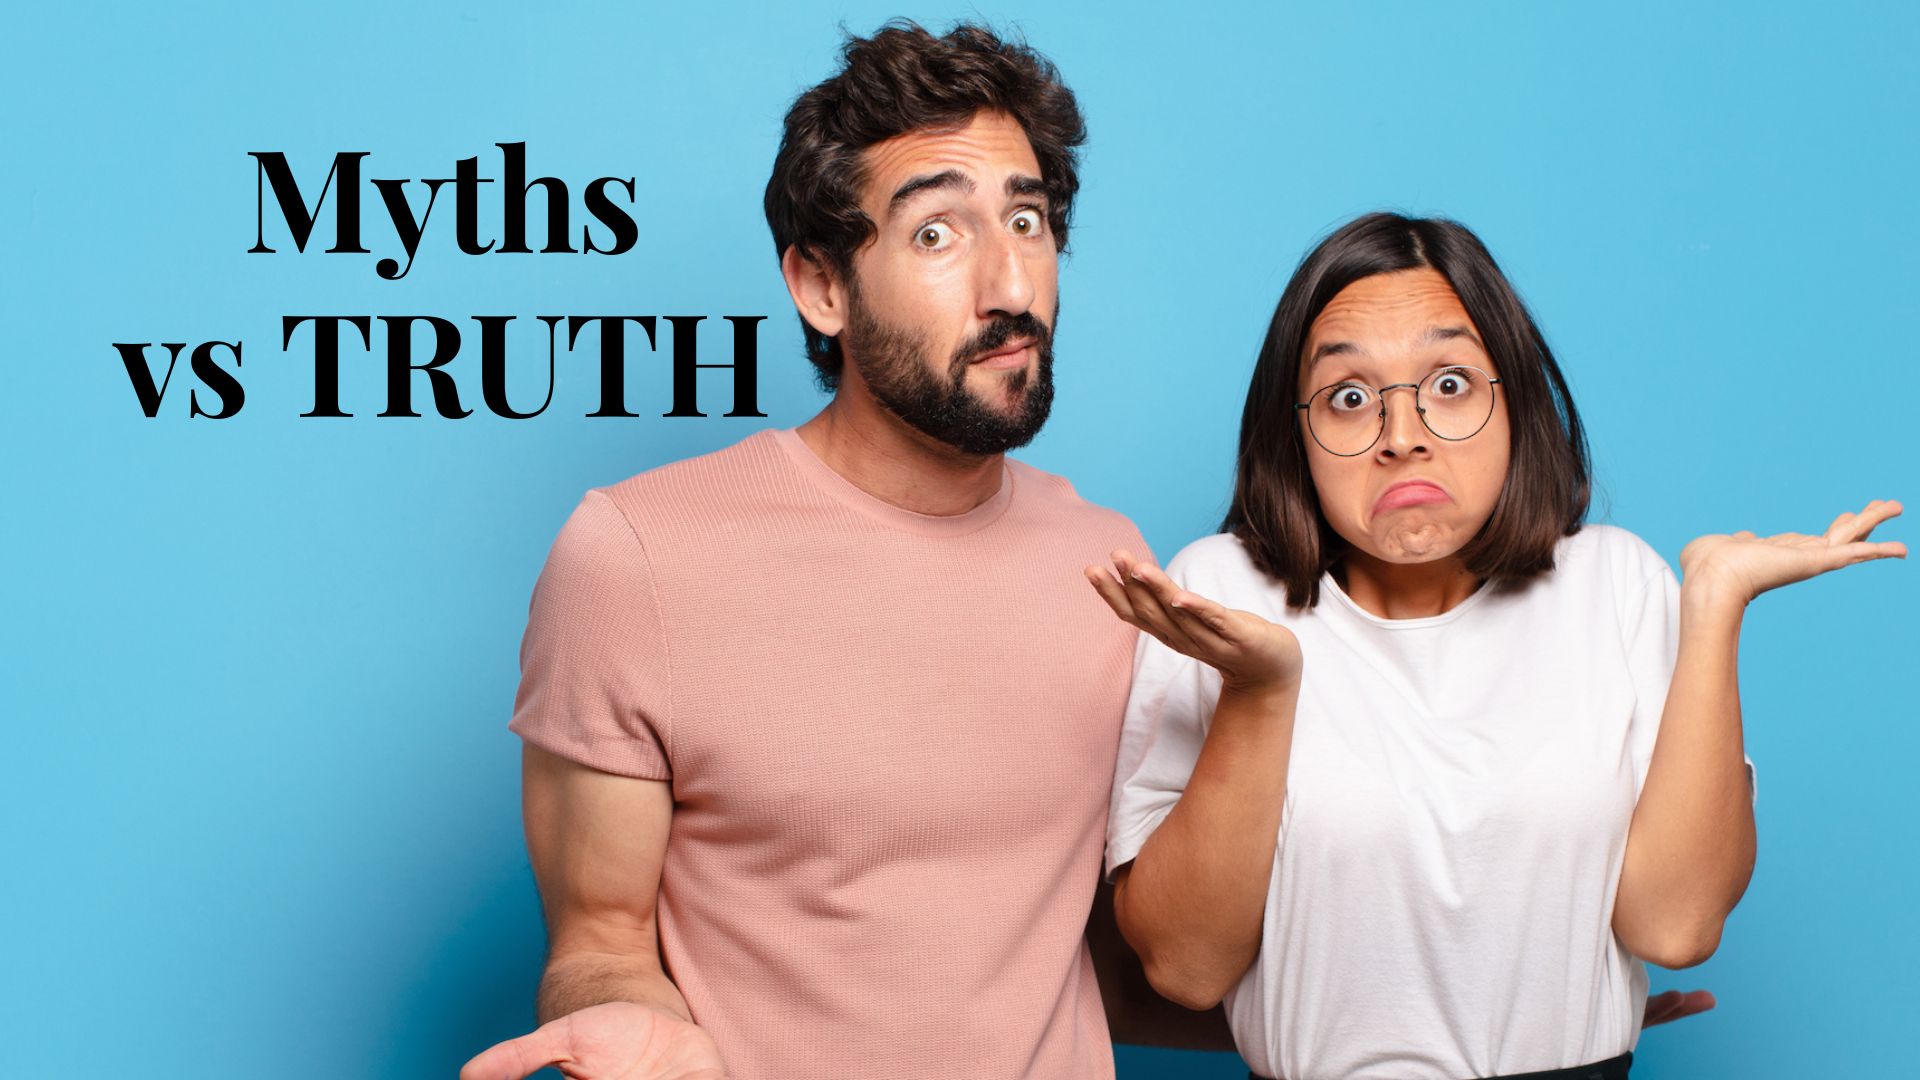 Myths vs TRUTH - Adobe Stock